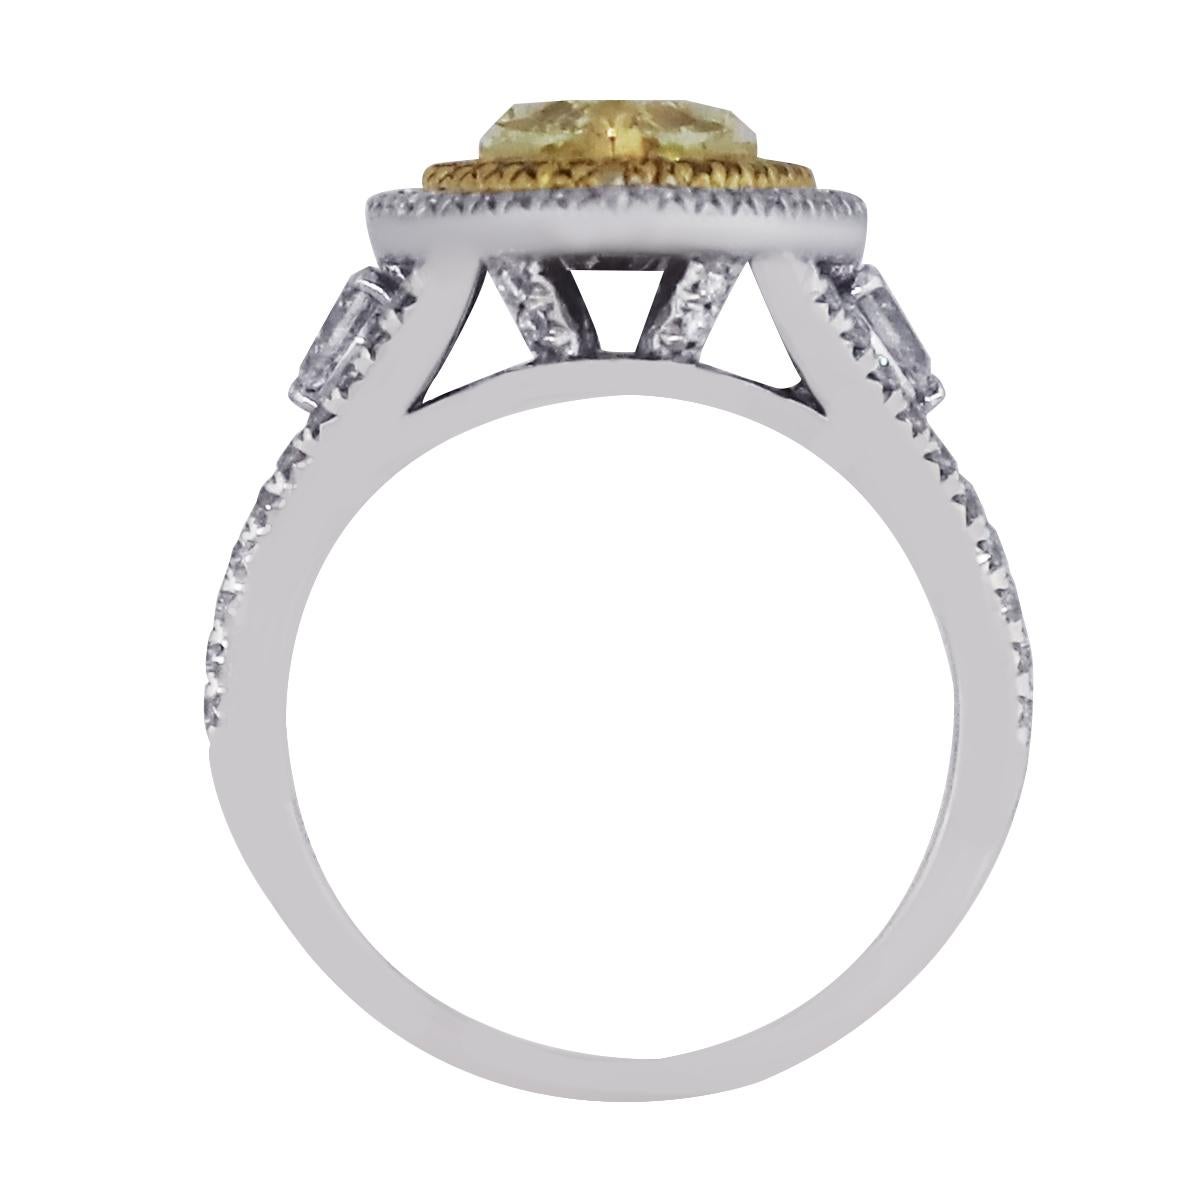 double halo yellow diamond ring